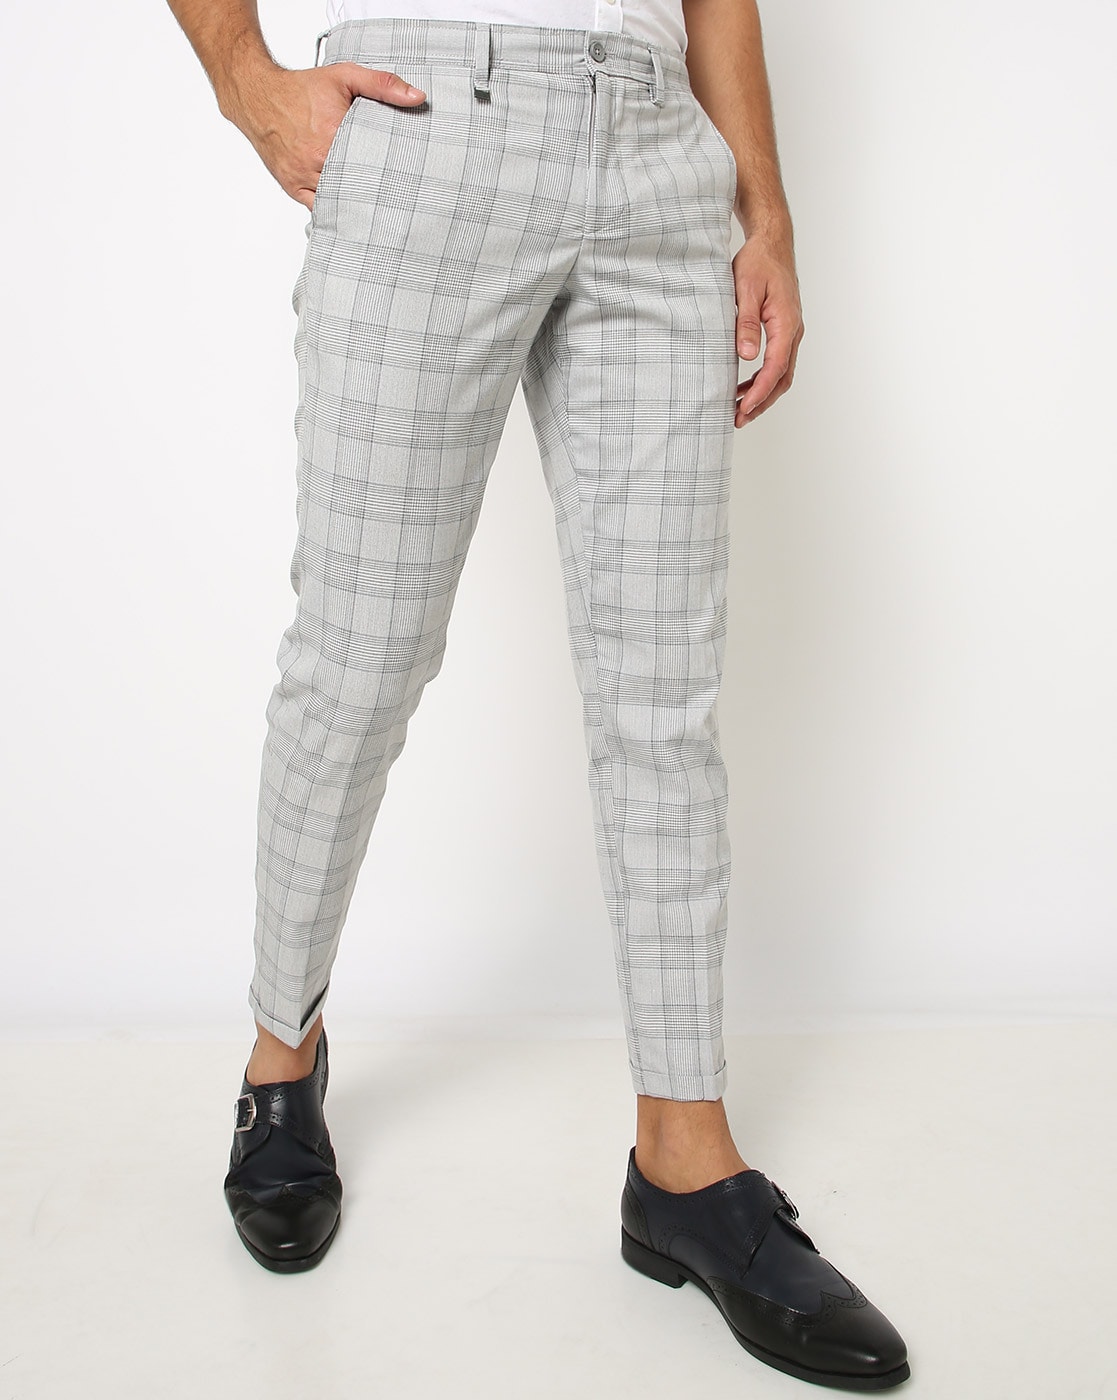 Reliance Trends BRAND NEW unused formal Capri trouser  Women  1738884665